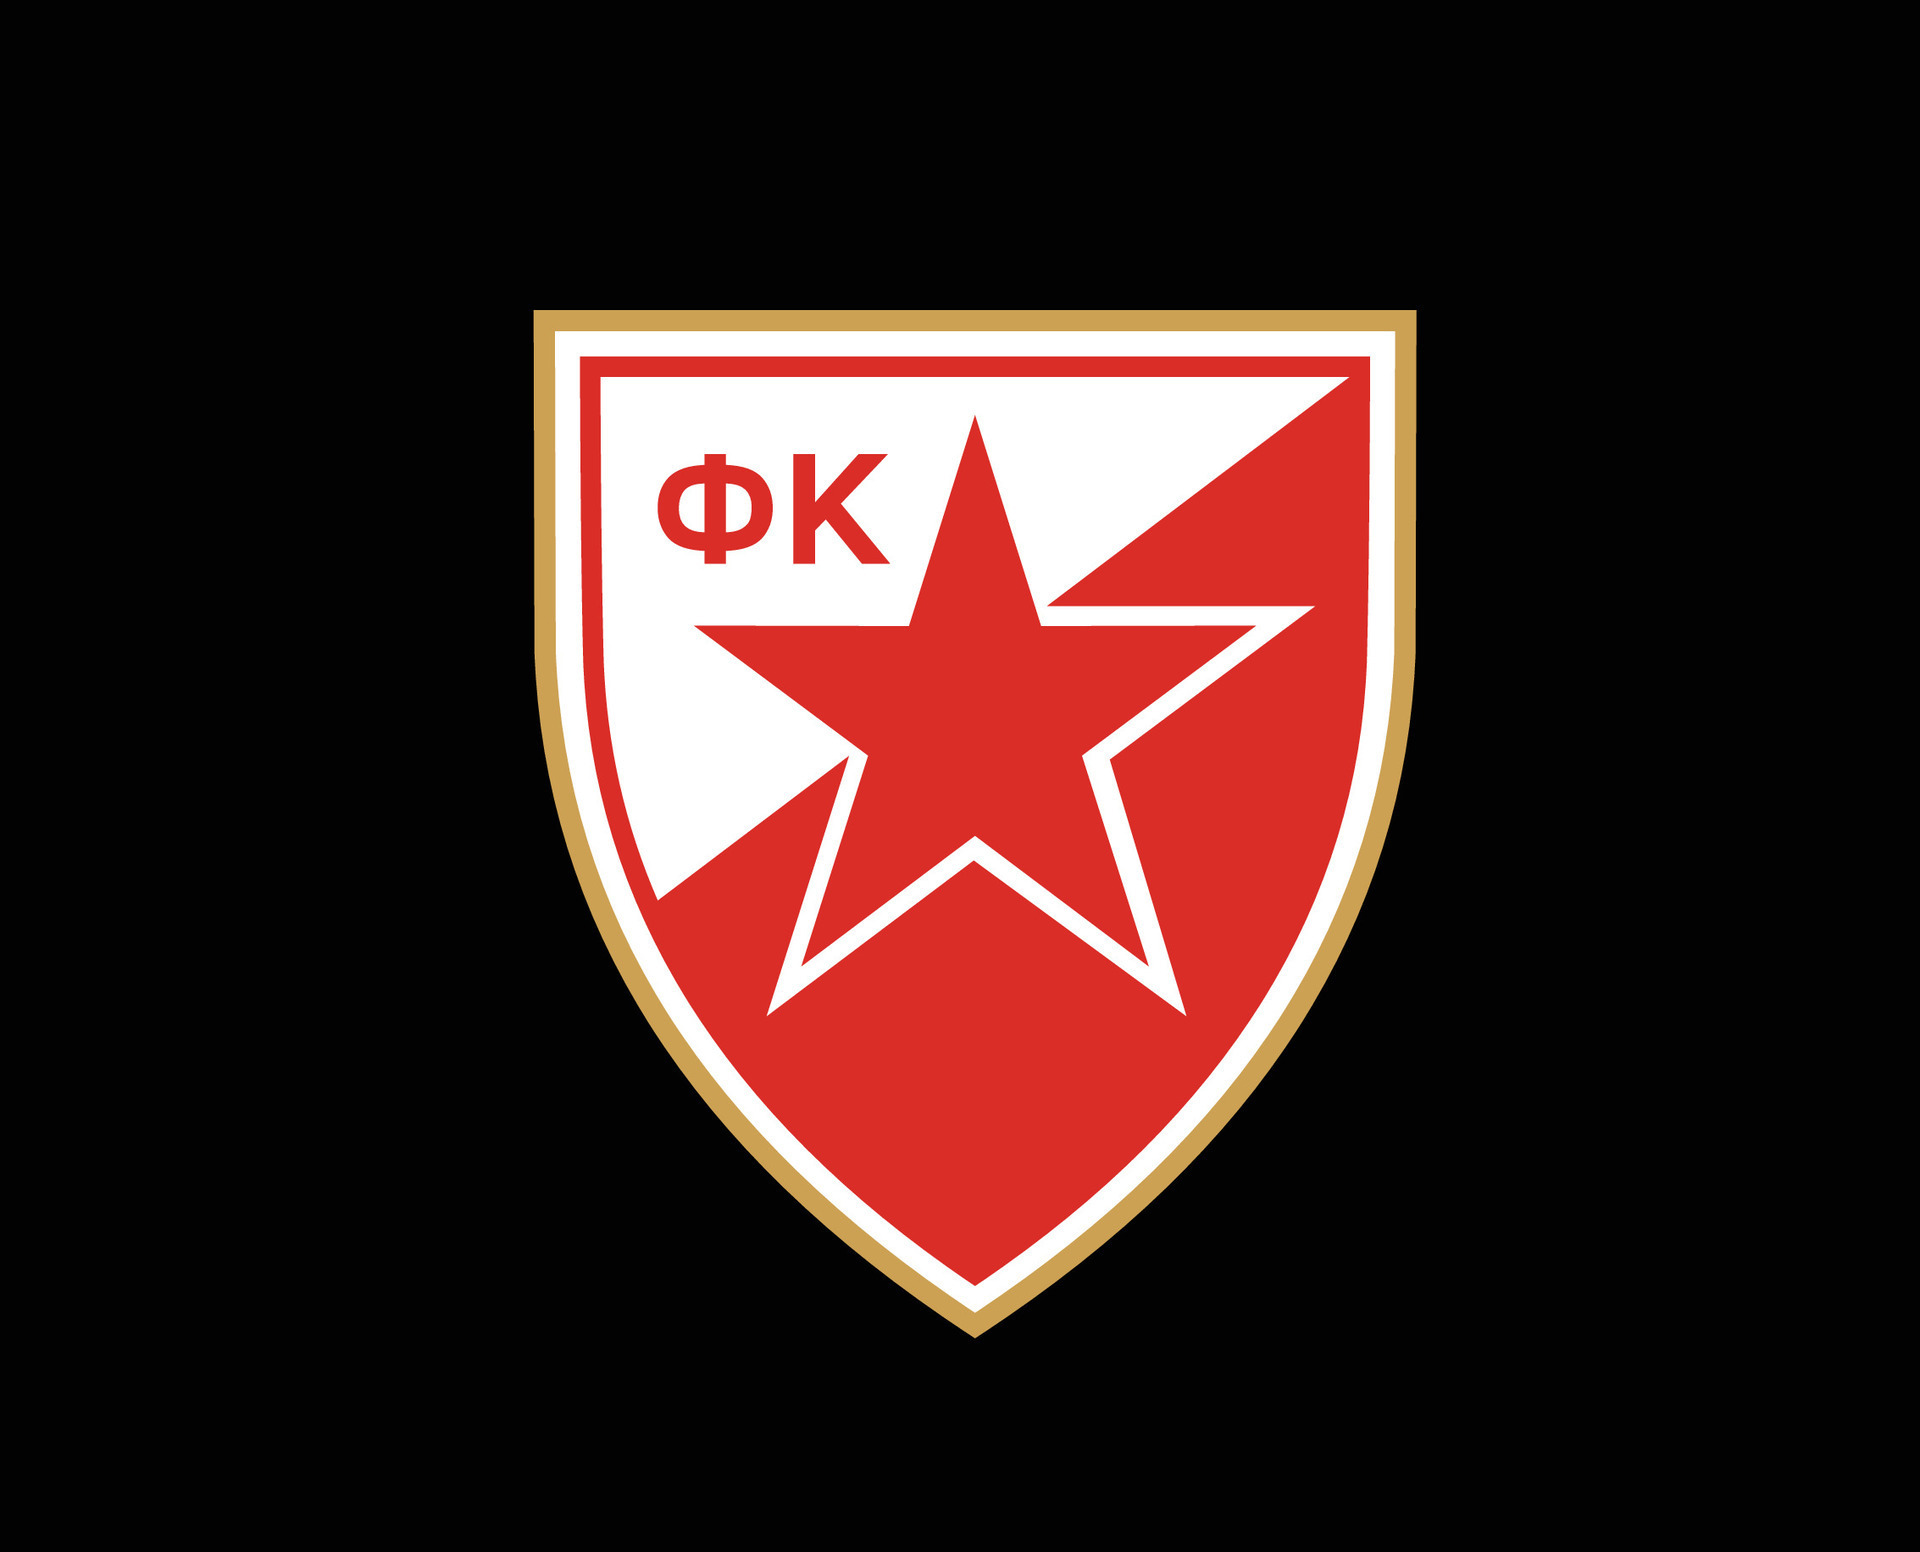 Crvena Zvezda Logo Club Symbol Serbia League Football Abstract Design  Vector Illustration With Black Background 31419802 Vector Art at Vecteezy